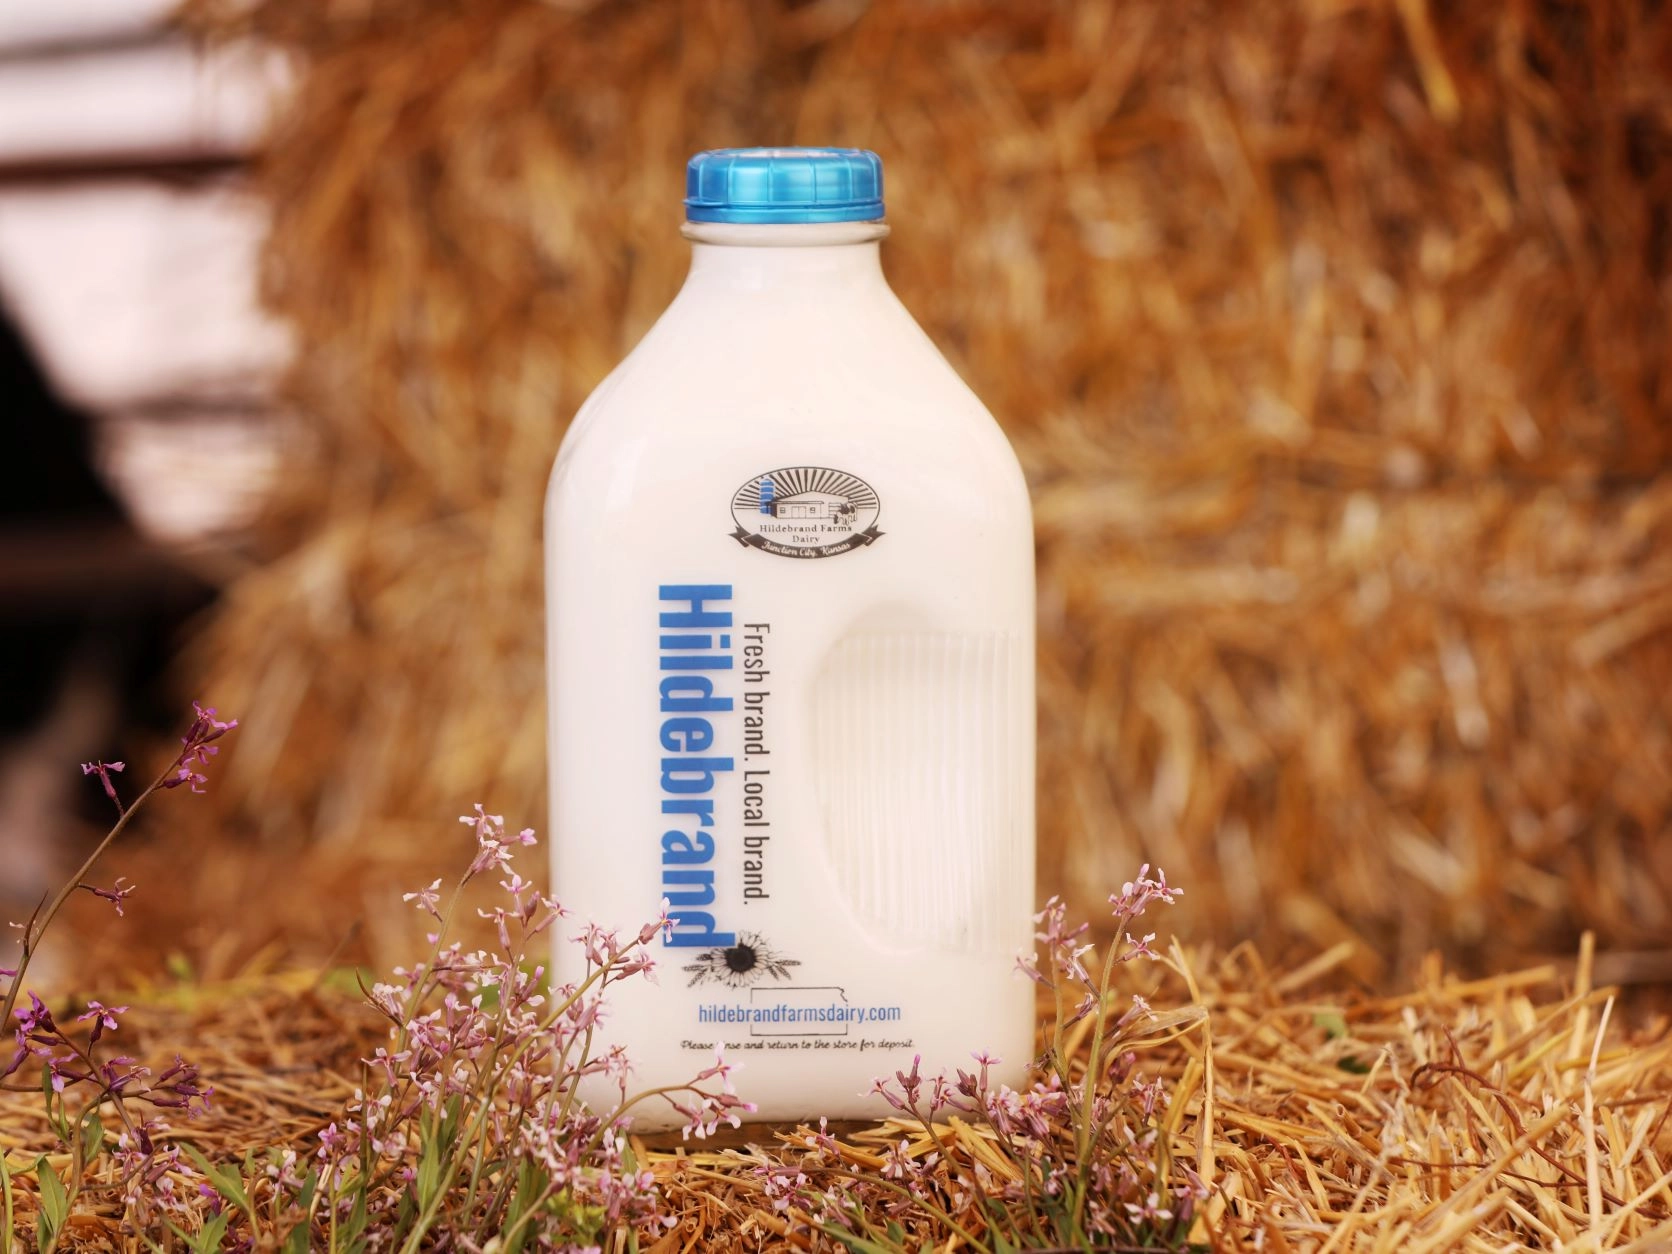 creamline-milk-hildebrand-farms-dairy